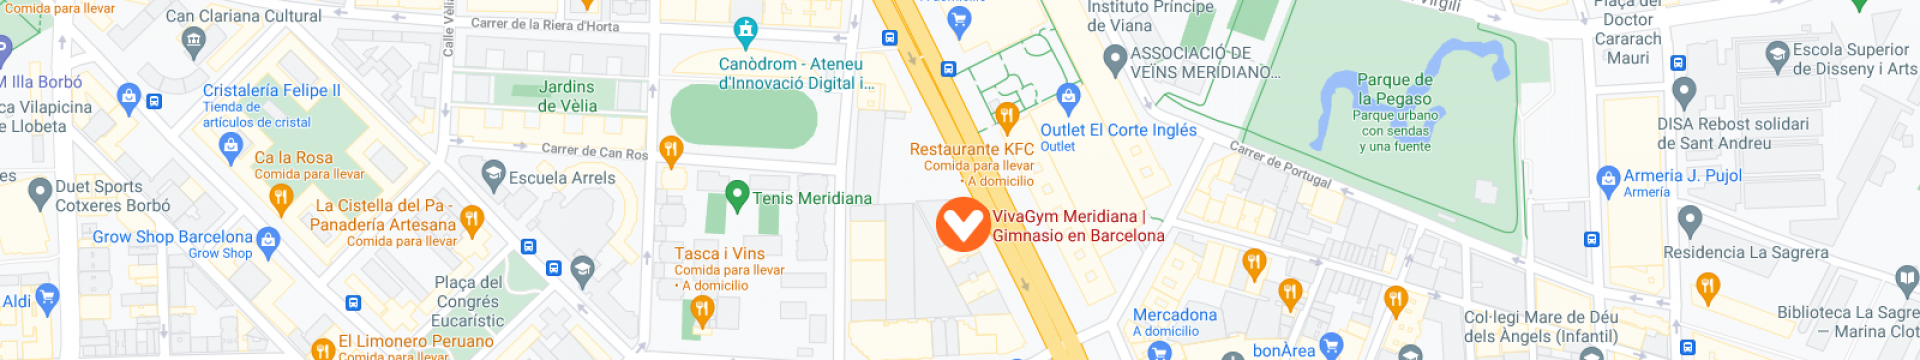 Mapa VivaGym Meridiana